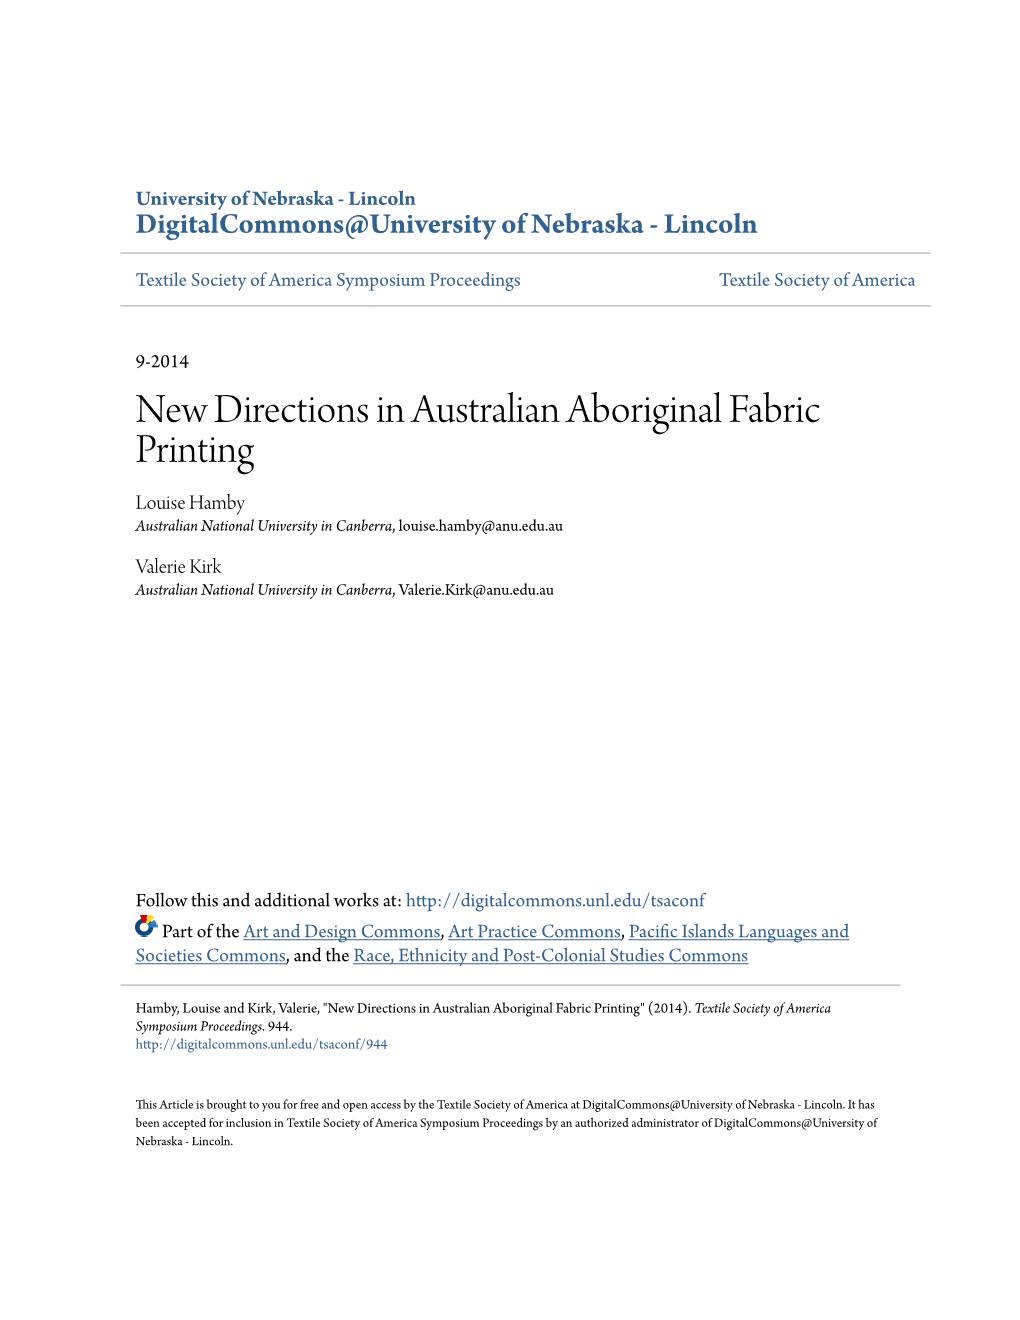 New Directions in Australian Aboriginal Fabric Printing Louise Hamby Australian National University in Canberra, Louise.Hamby@Anu.Edu.Au